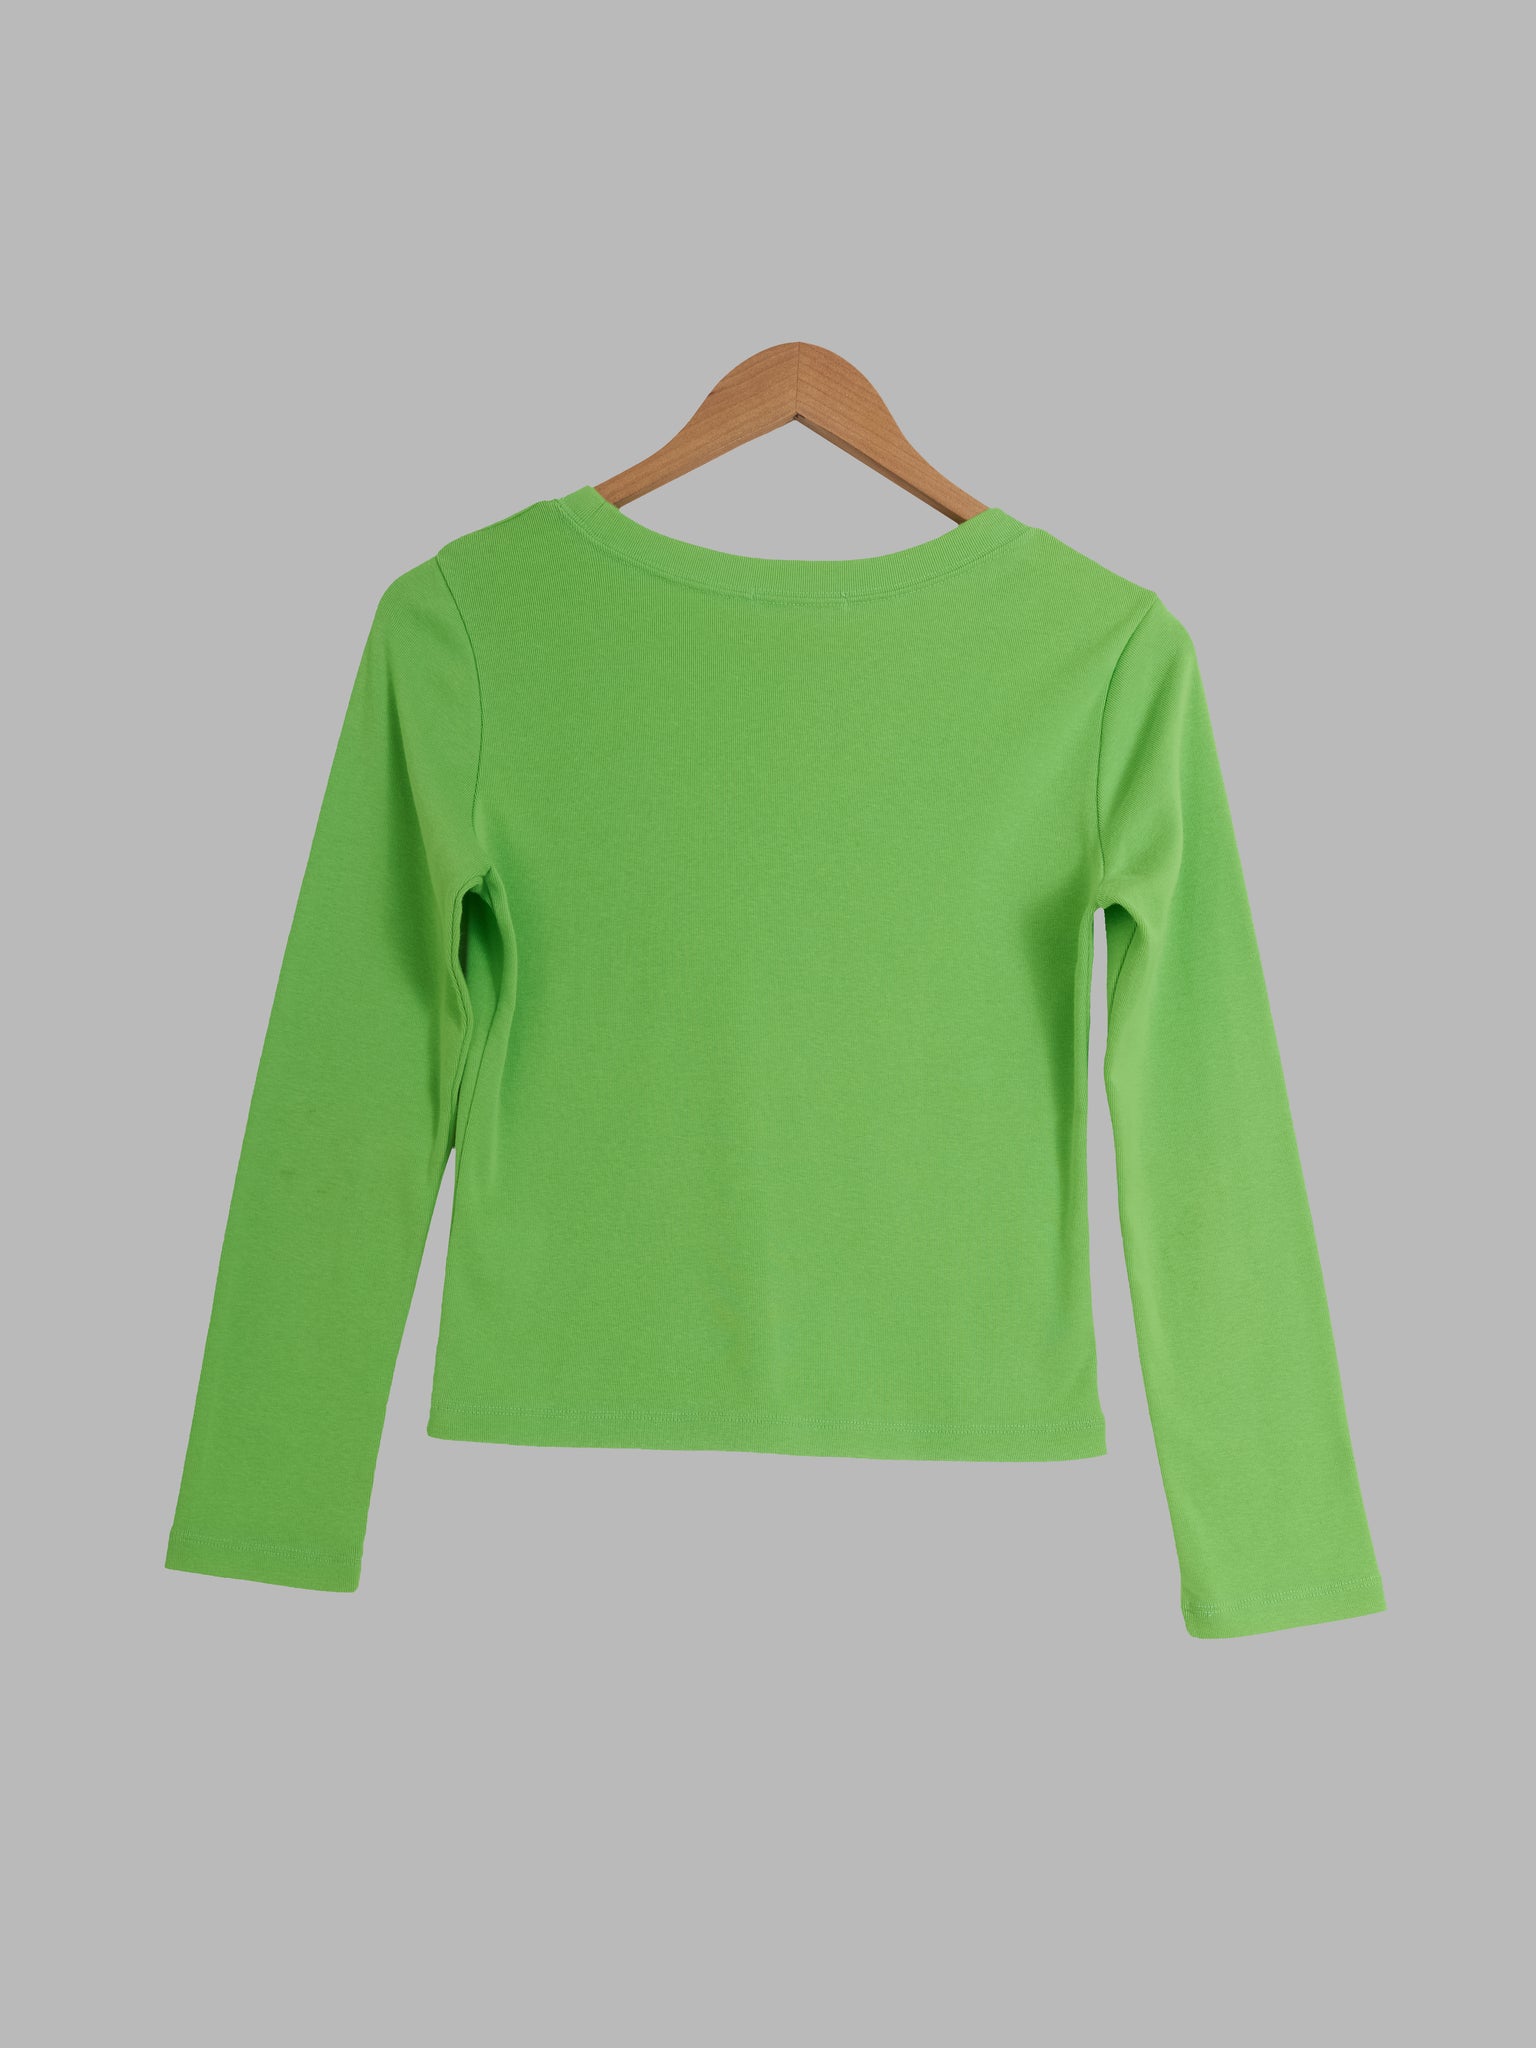 Yoshiki Hishinuma green cotton jersey knit long sleeve top